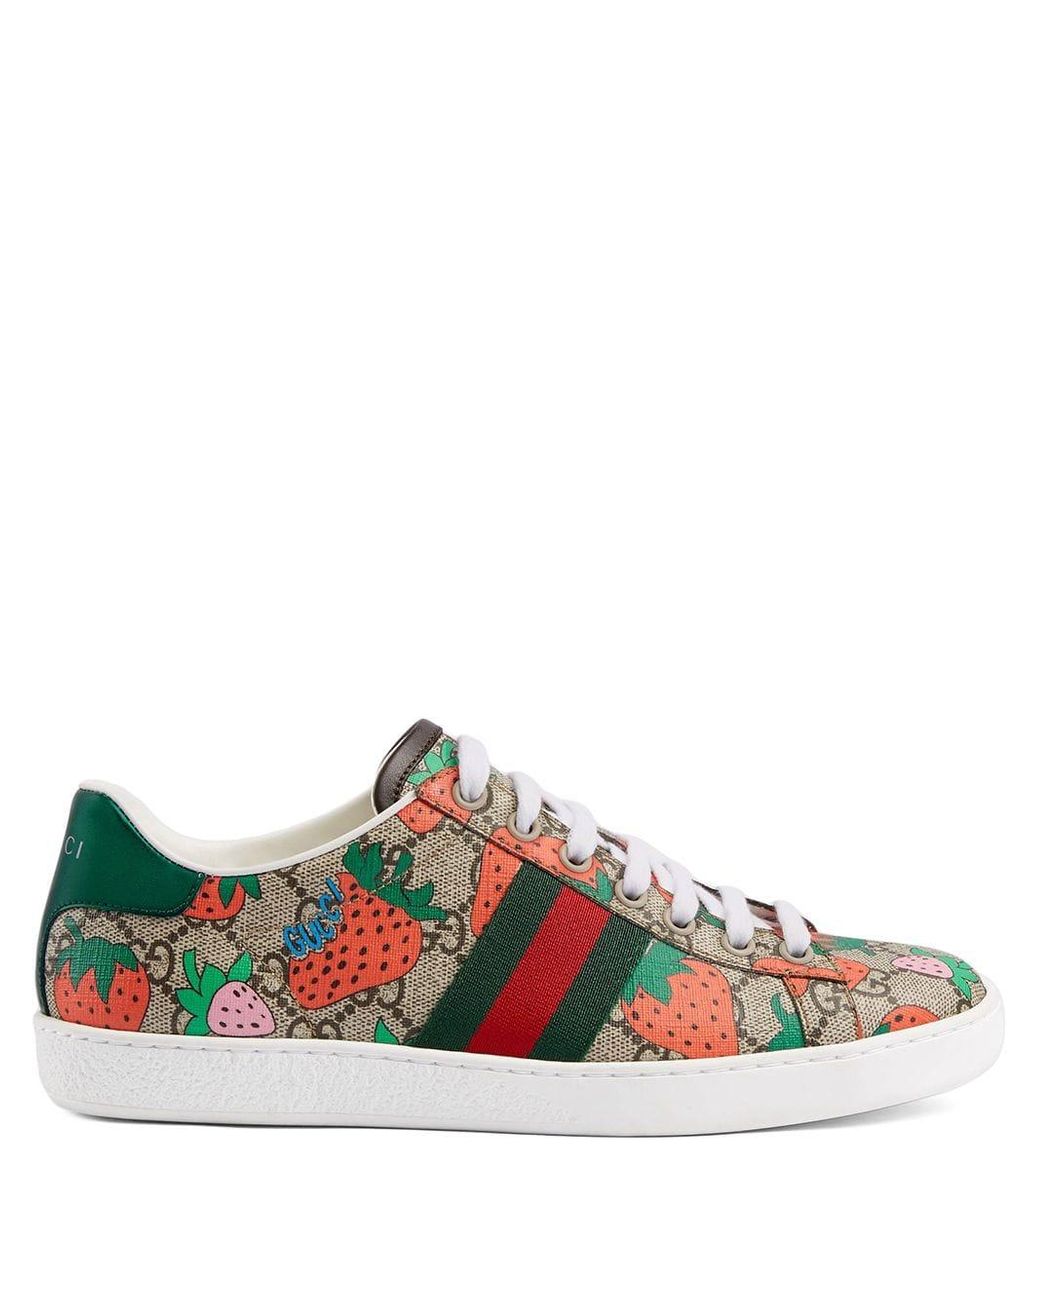 Gucci Canvas Women's Ace GG Strawberry Sneaker - Lyst